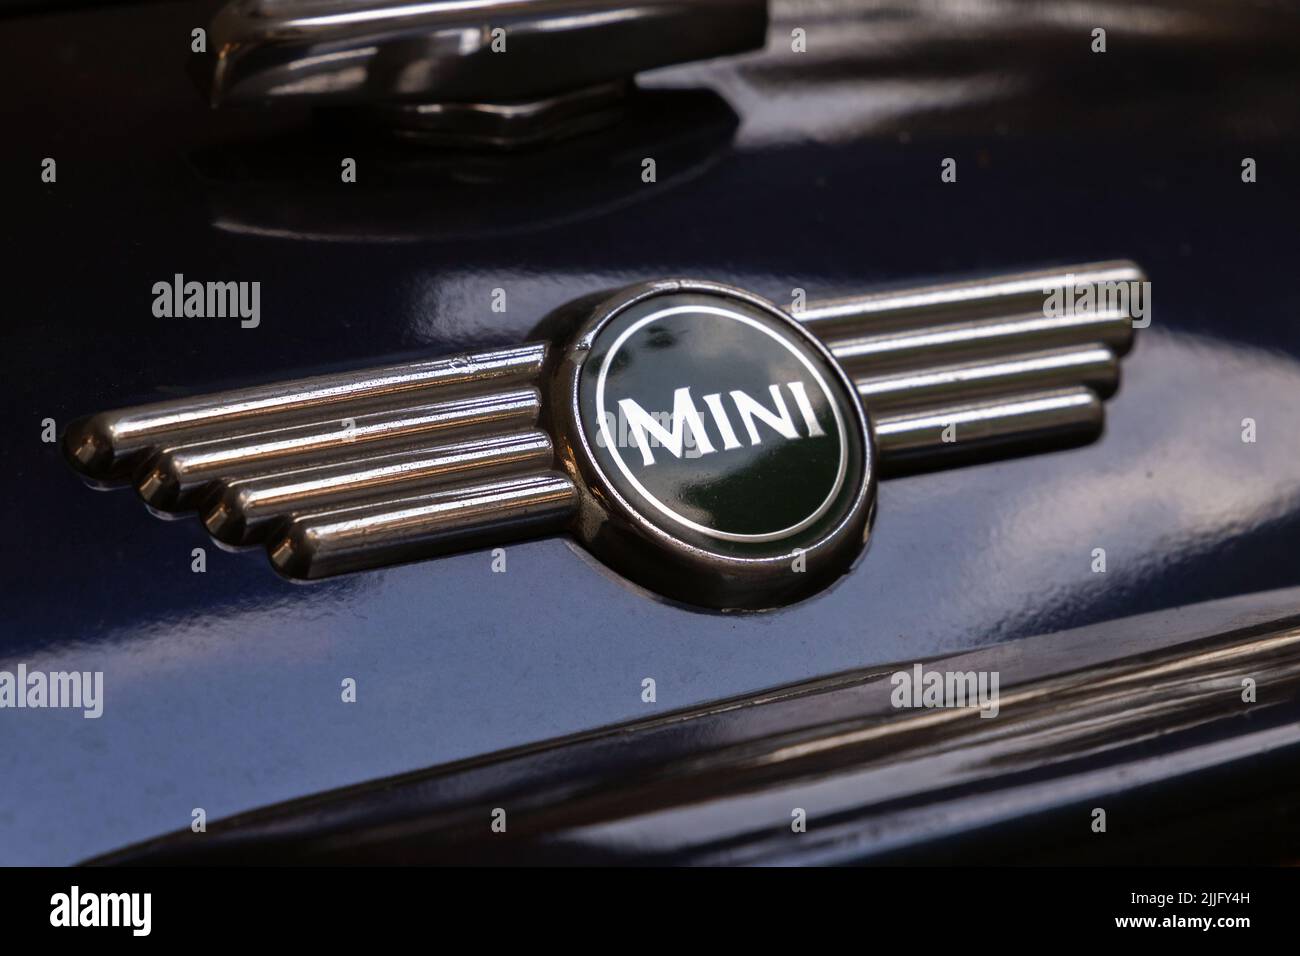 London, UK - November 30, 2021: Logotype of vintage Mini Cooper car produced by British Motor Corporation is on the shiny black car hood Stock Photo